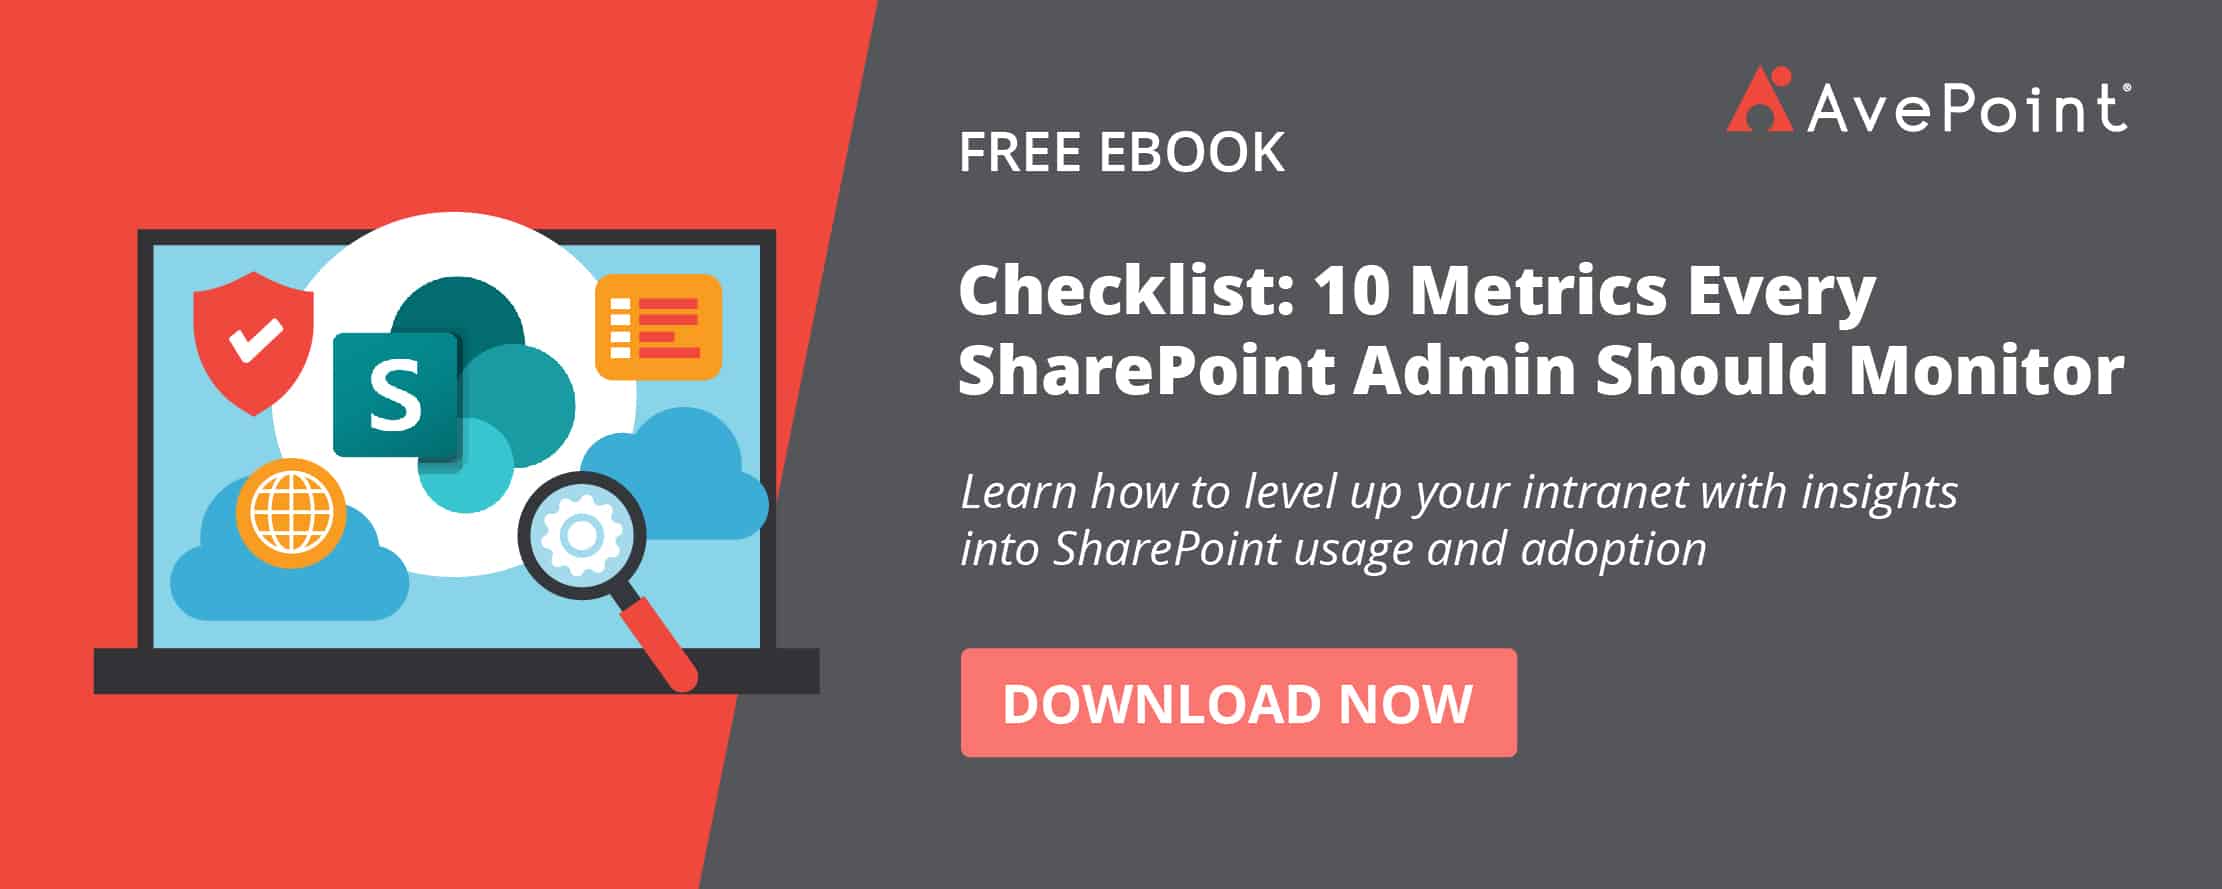 sharepoint-admin-checklist-ebook-avepoint